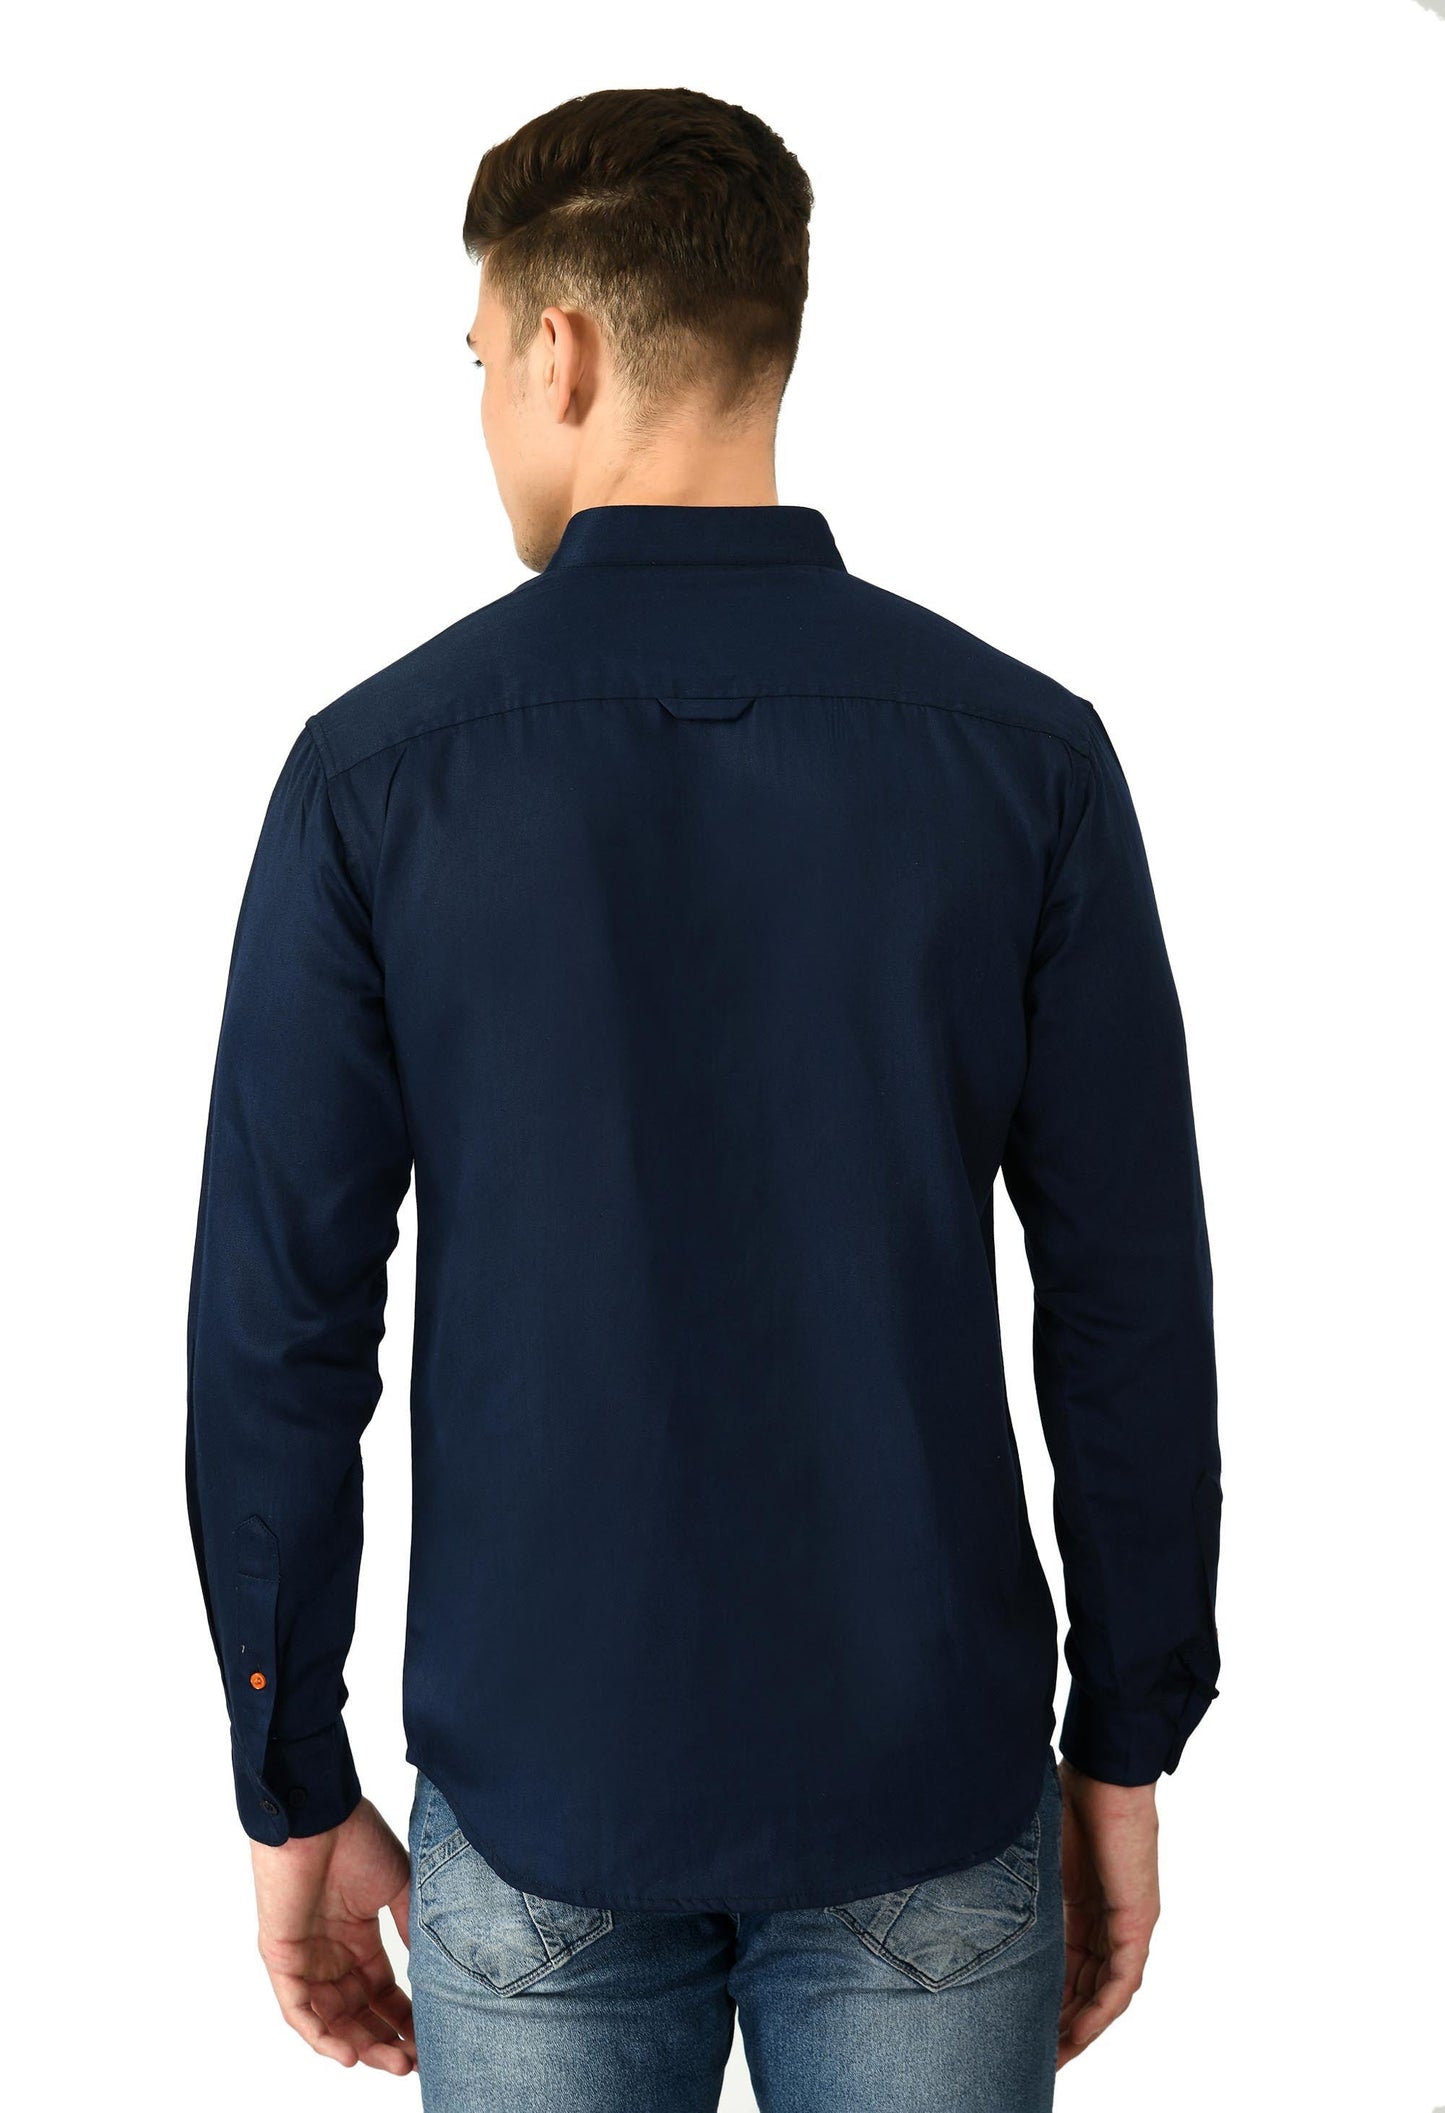 Full Sleeve Cotton Chinese Collar Men's Shirt - Navy Blue